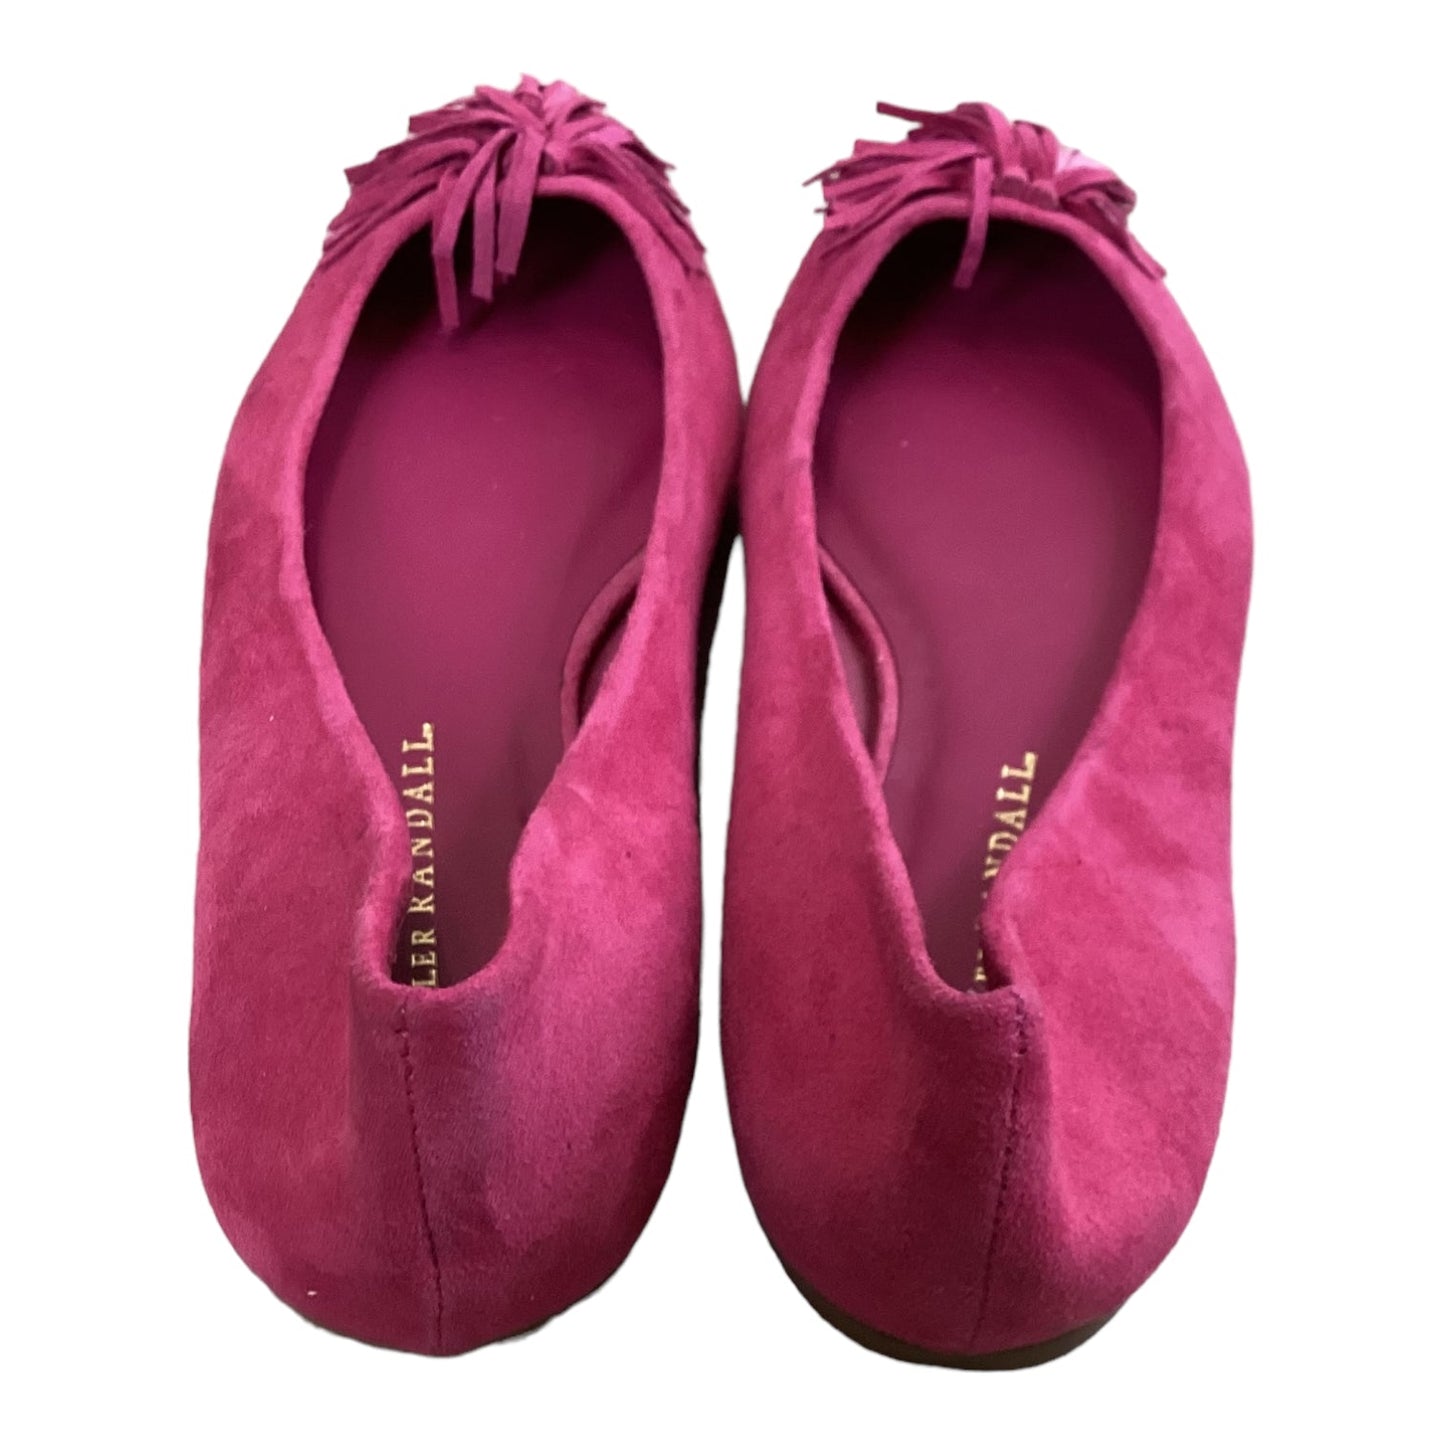 Shoes Flats Ballet By Loeffler Randall  Size: 7.5